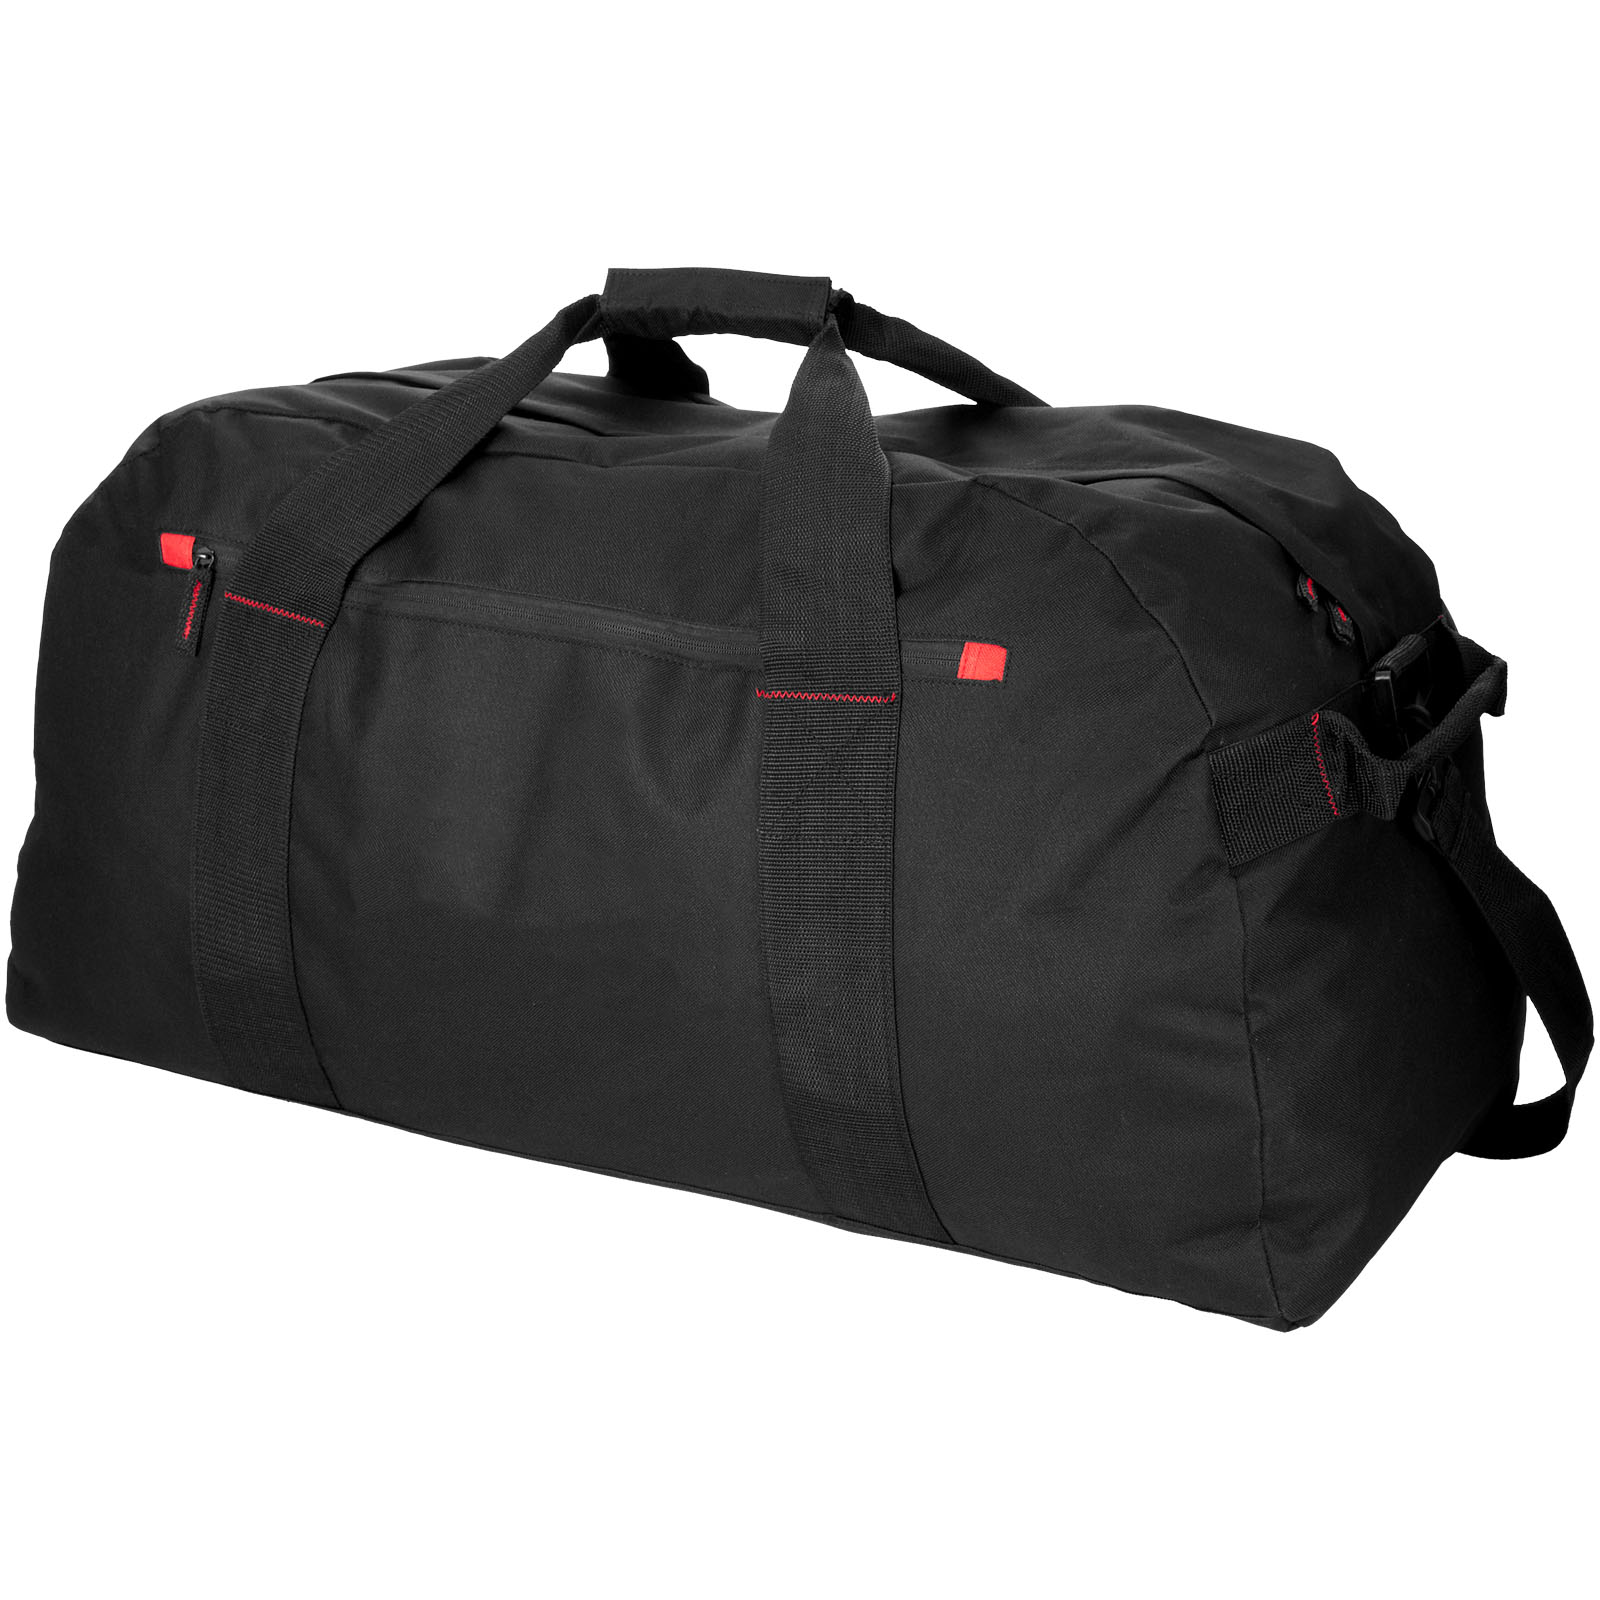 Extra Large Travel Bag - Bampton - Oxenholme